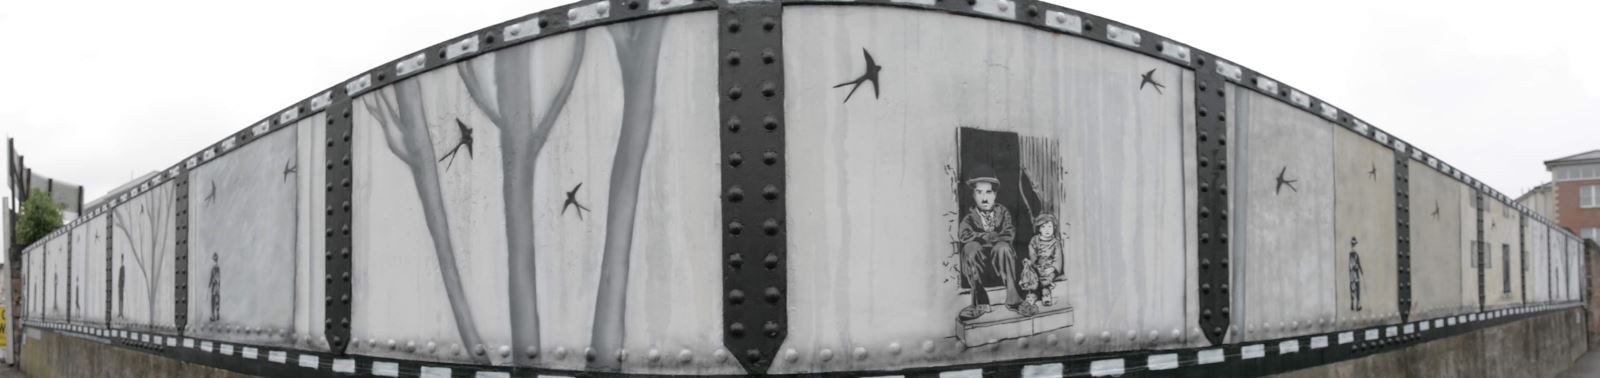 The Charlie Chaplin mural